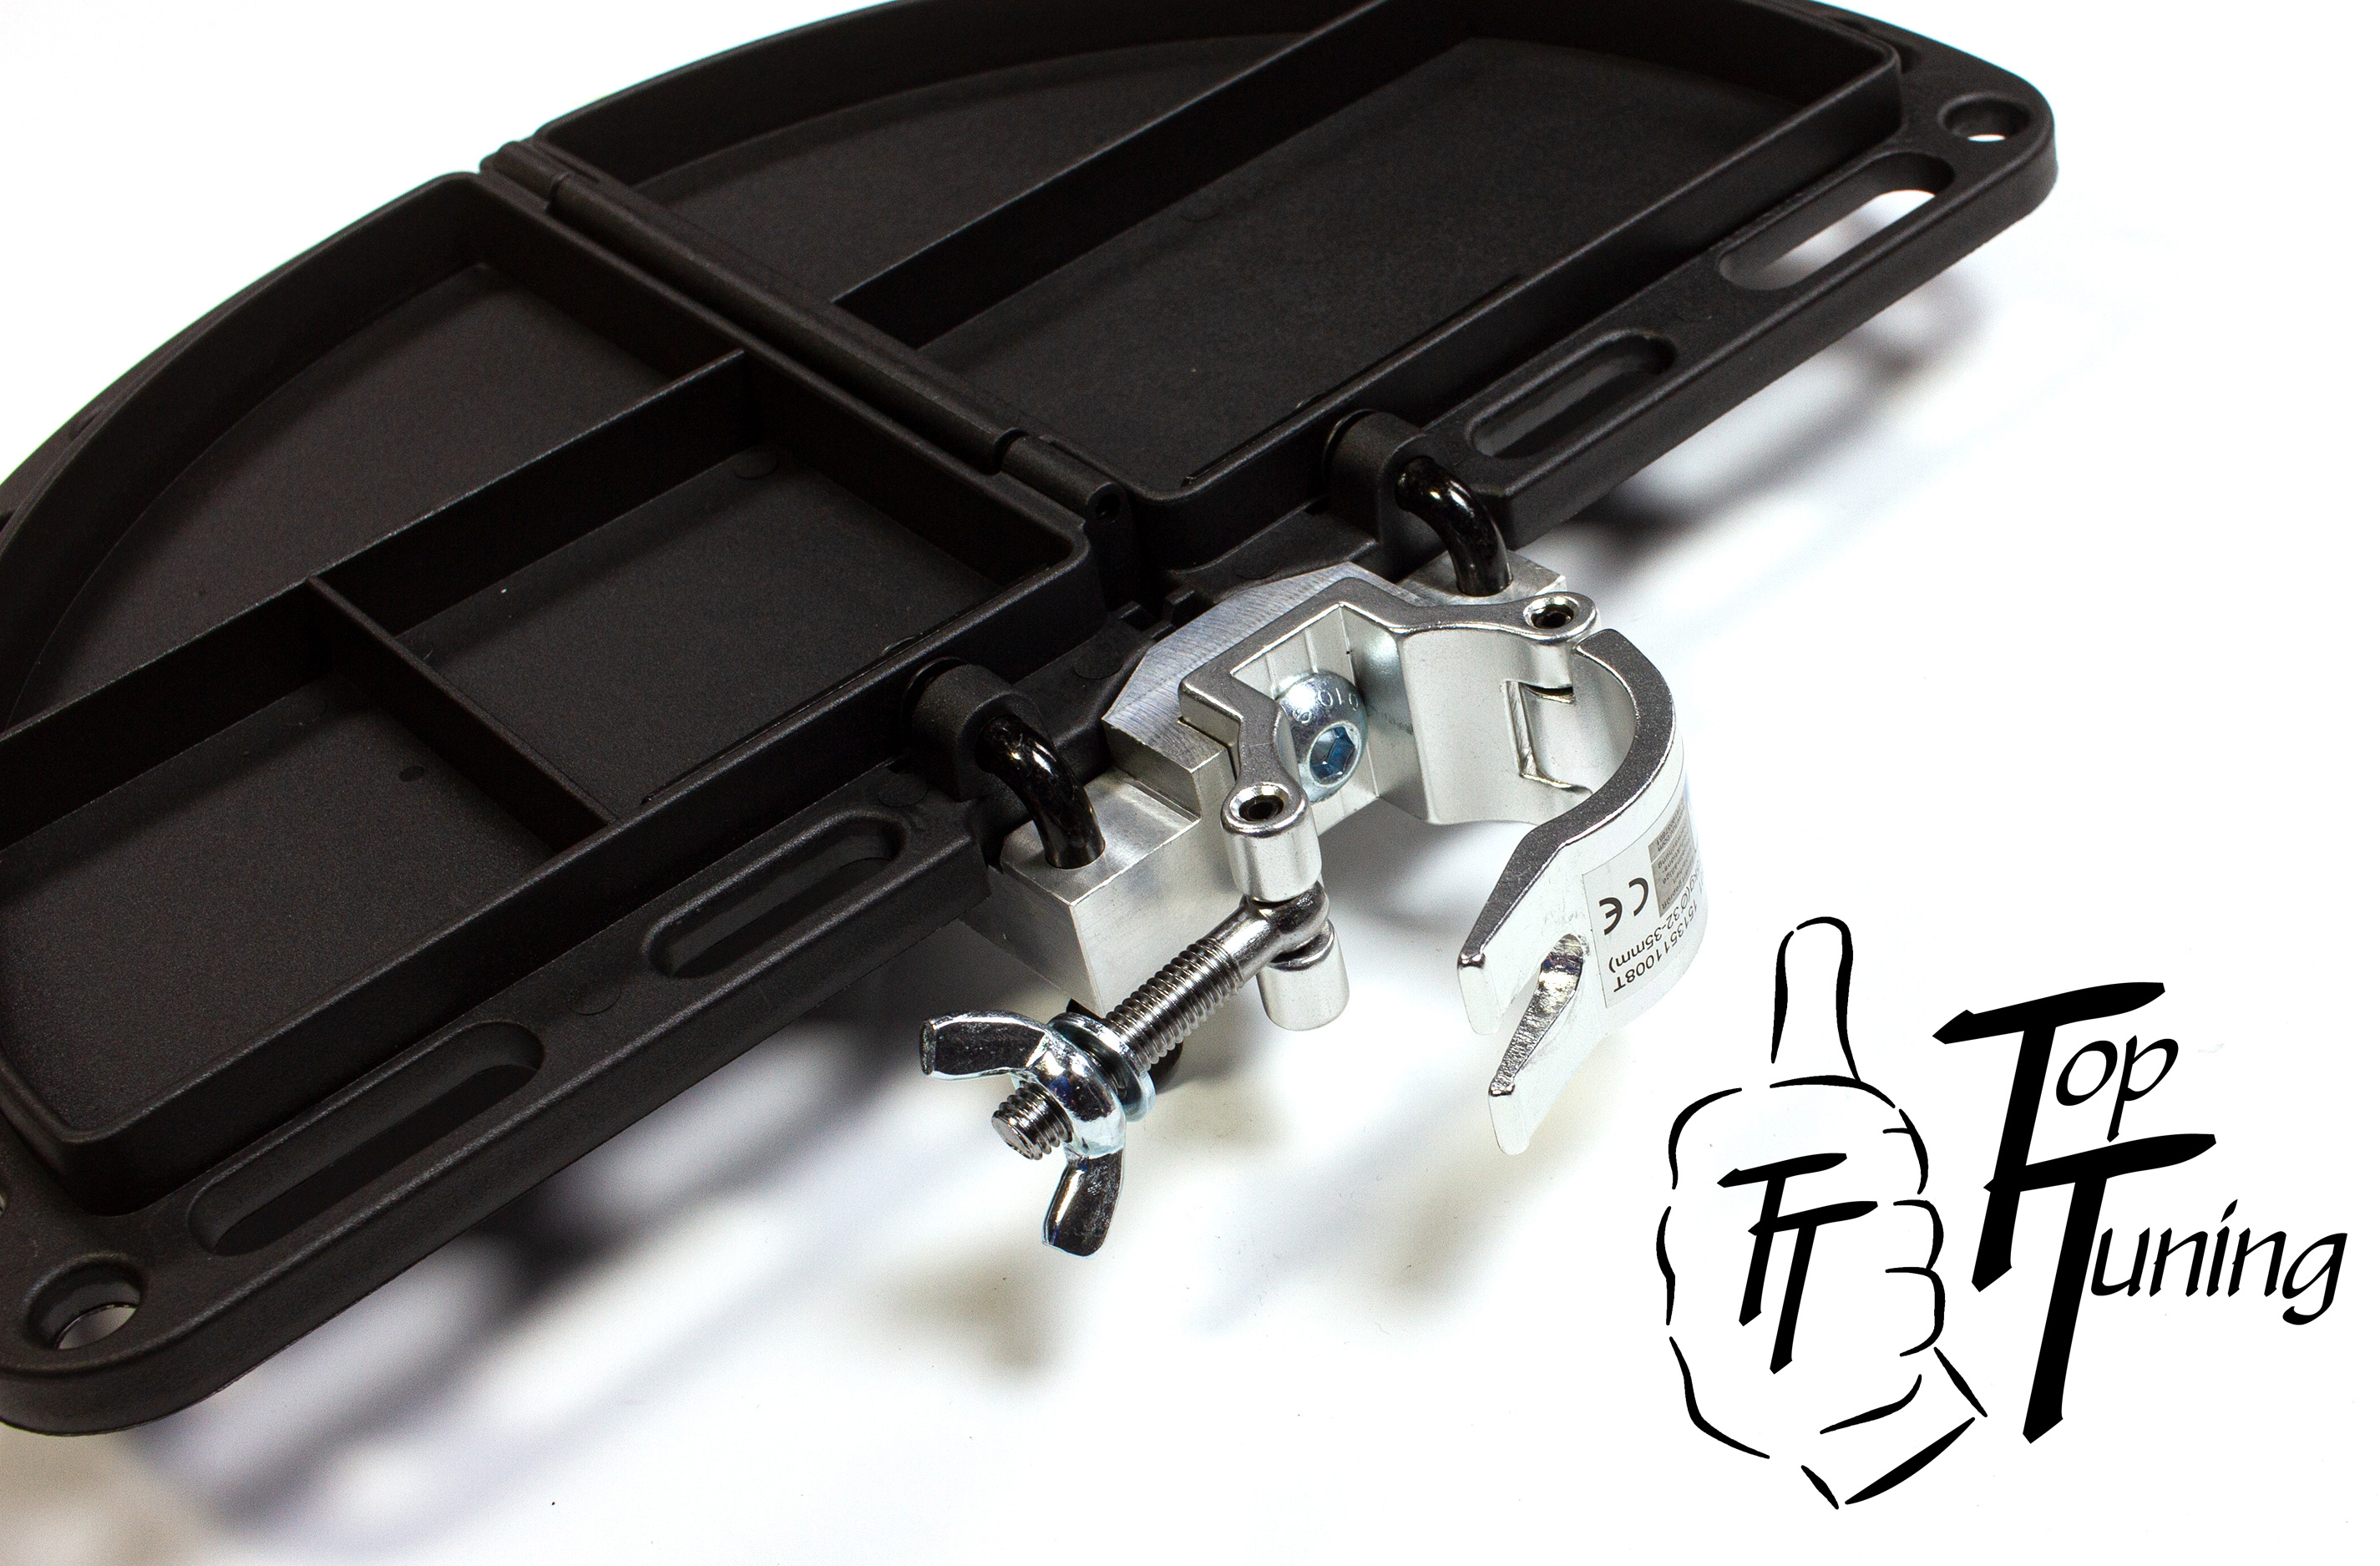 TT1030/01 TopTuning Tool Tray für CAR-STAND